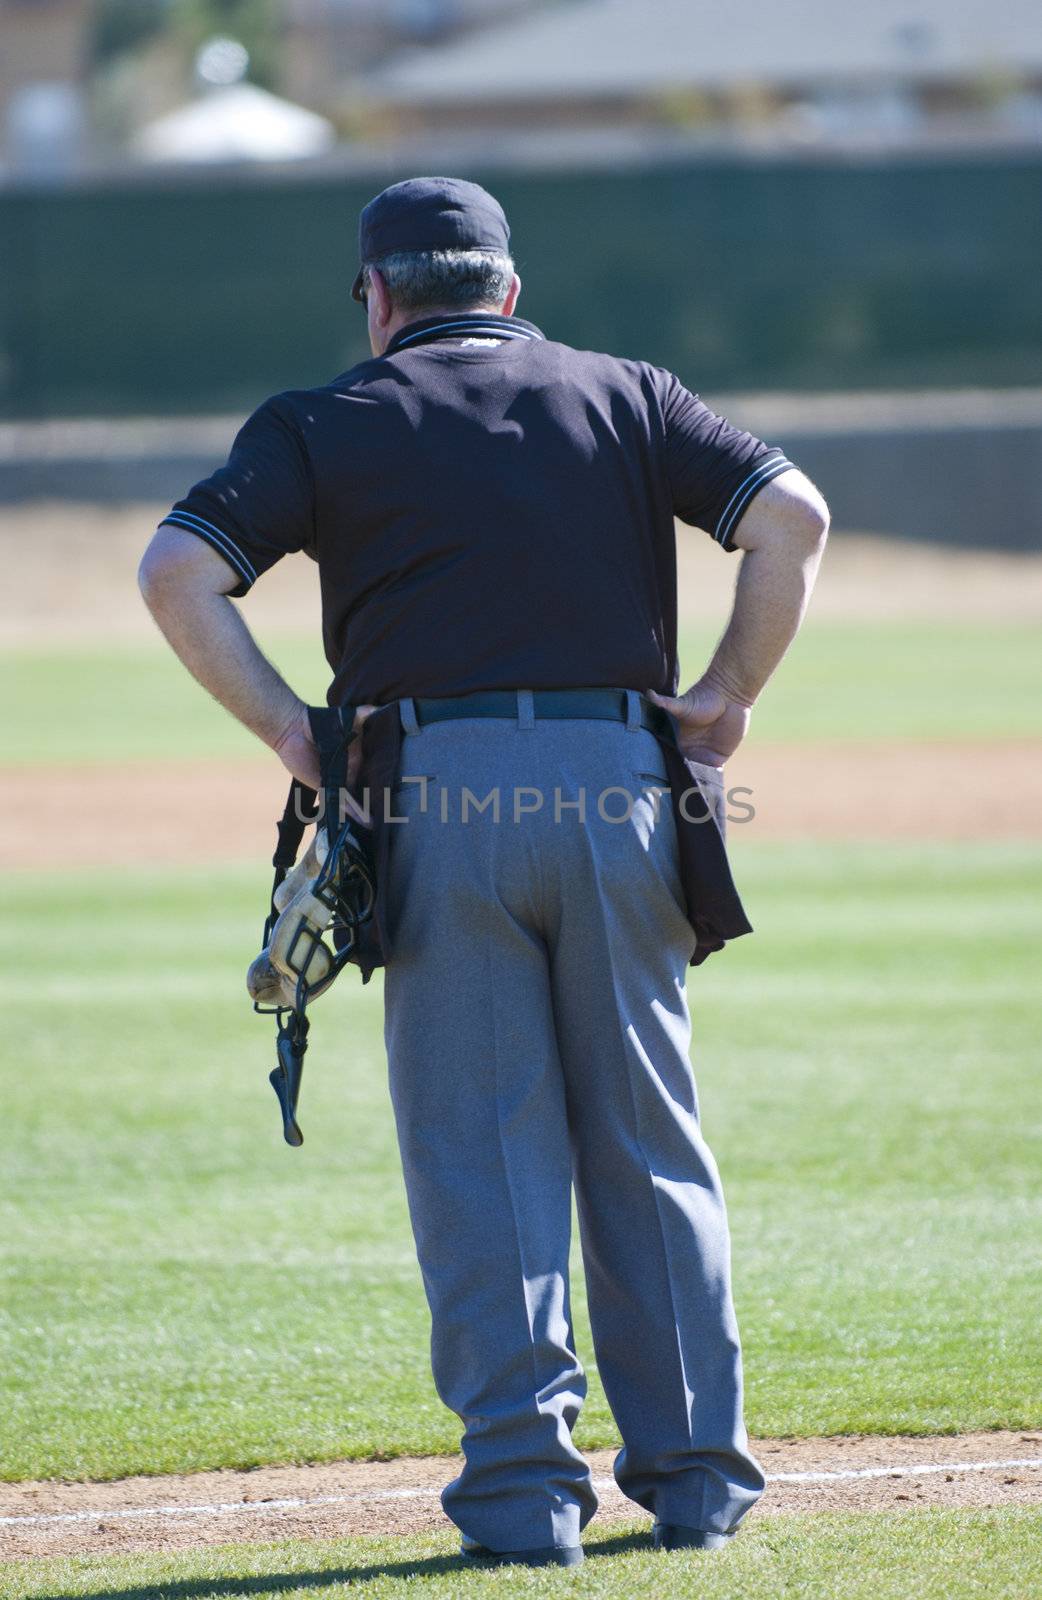 Baseball umpire